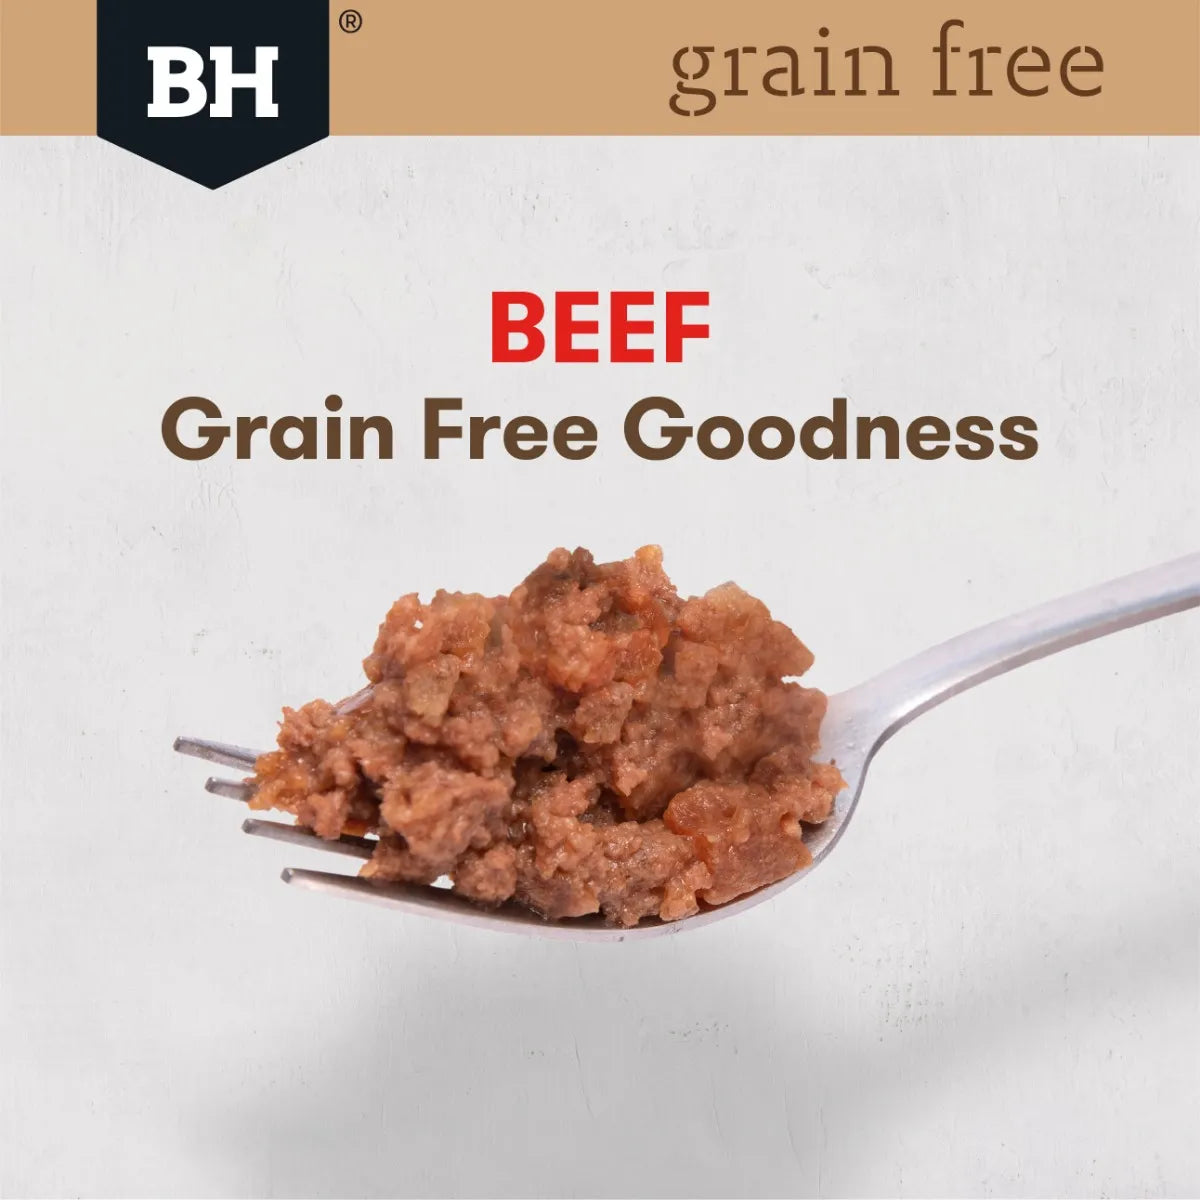 BlackHawk: Dog Grain Free Beef Can 400g